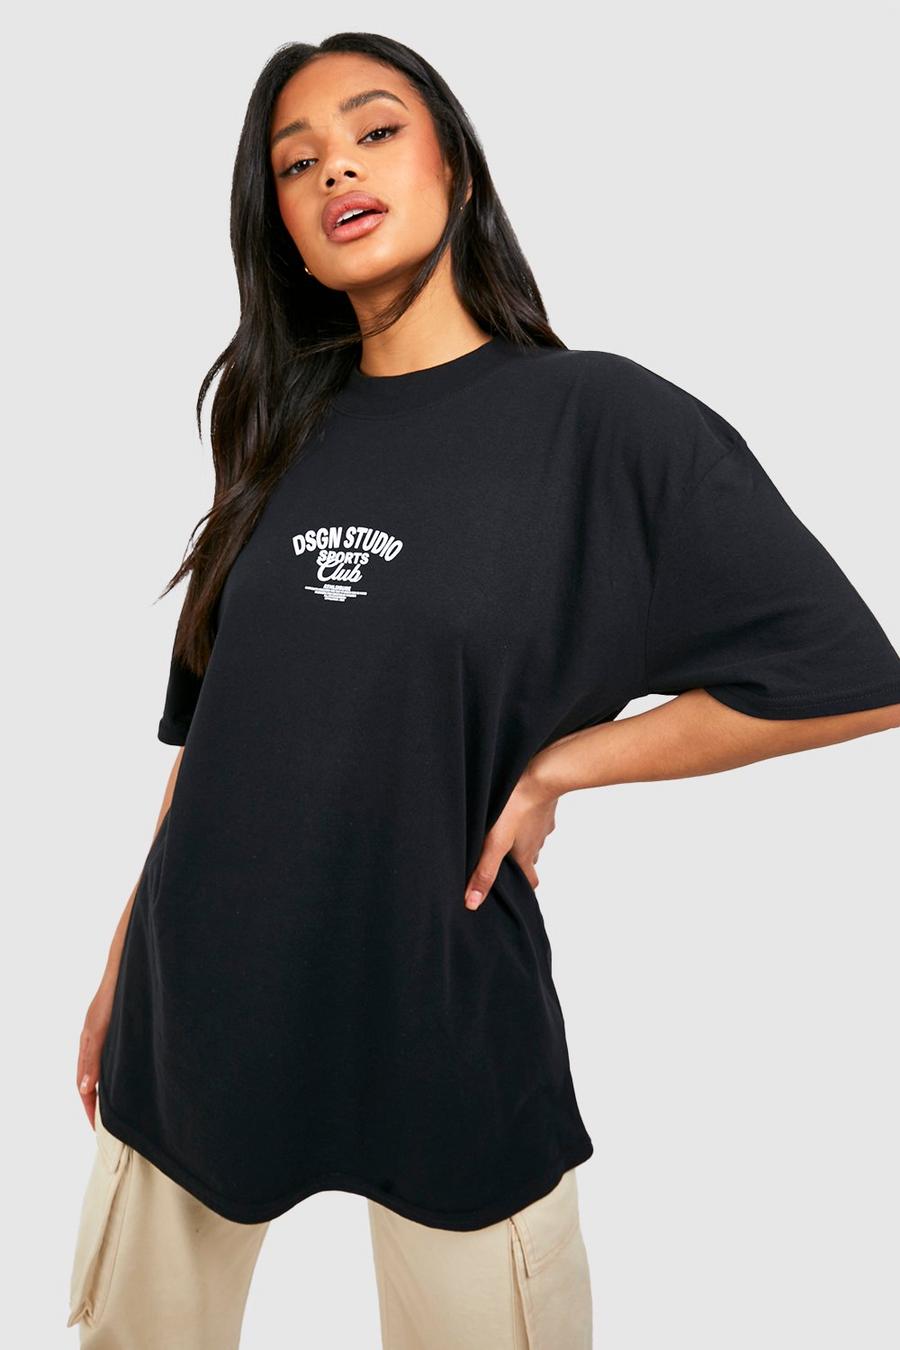 Oversize T-Shirt mit Dsgn Studio Sports Club Slogan, Black noir